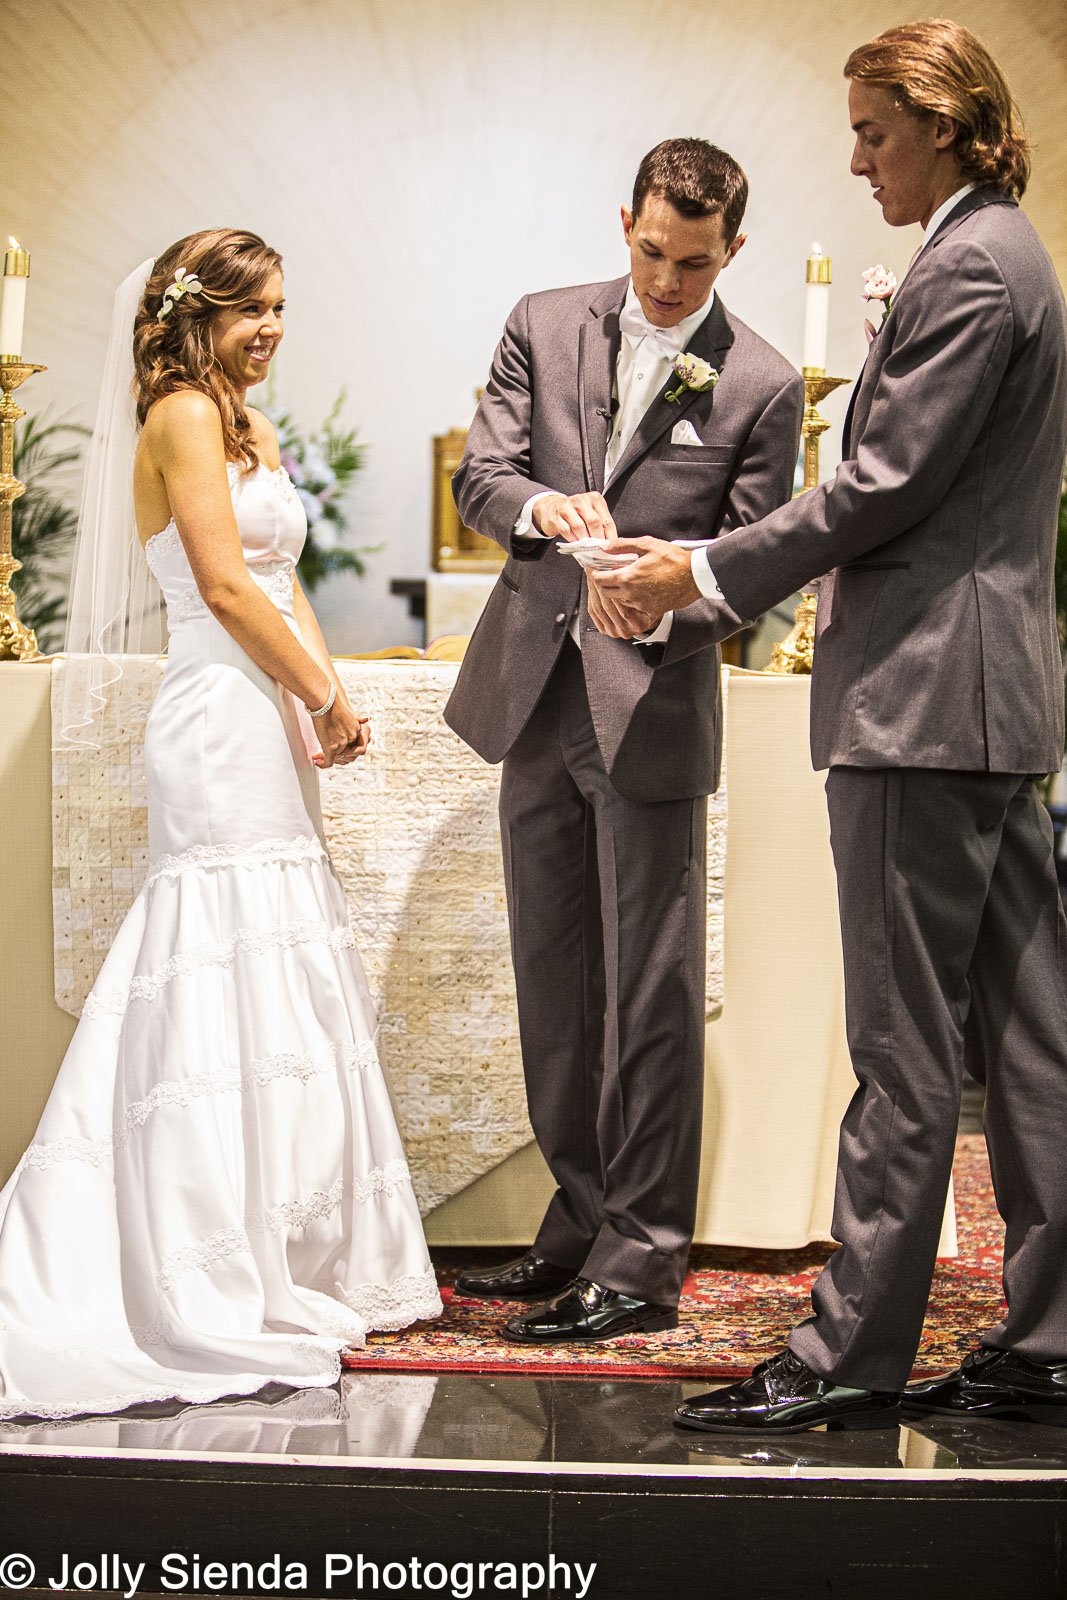 Church weddings by Jolly Sienda Photography